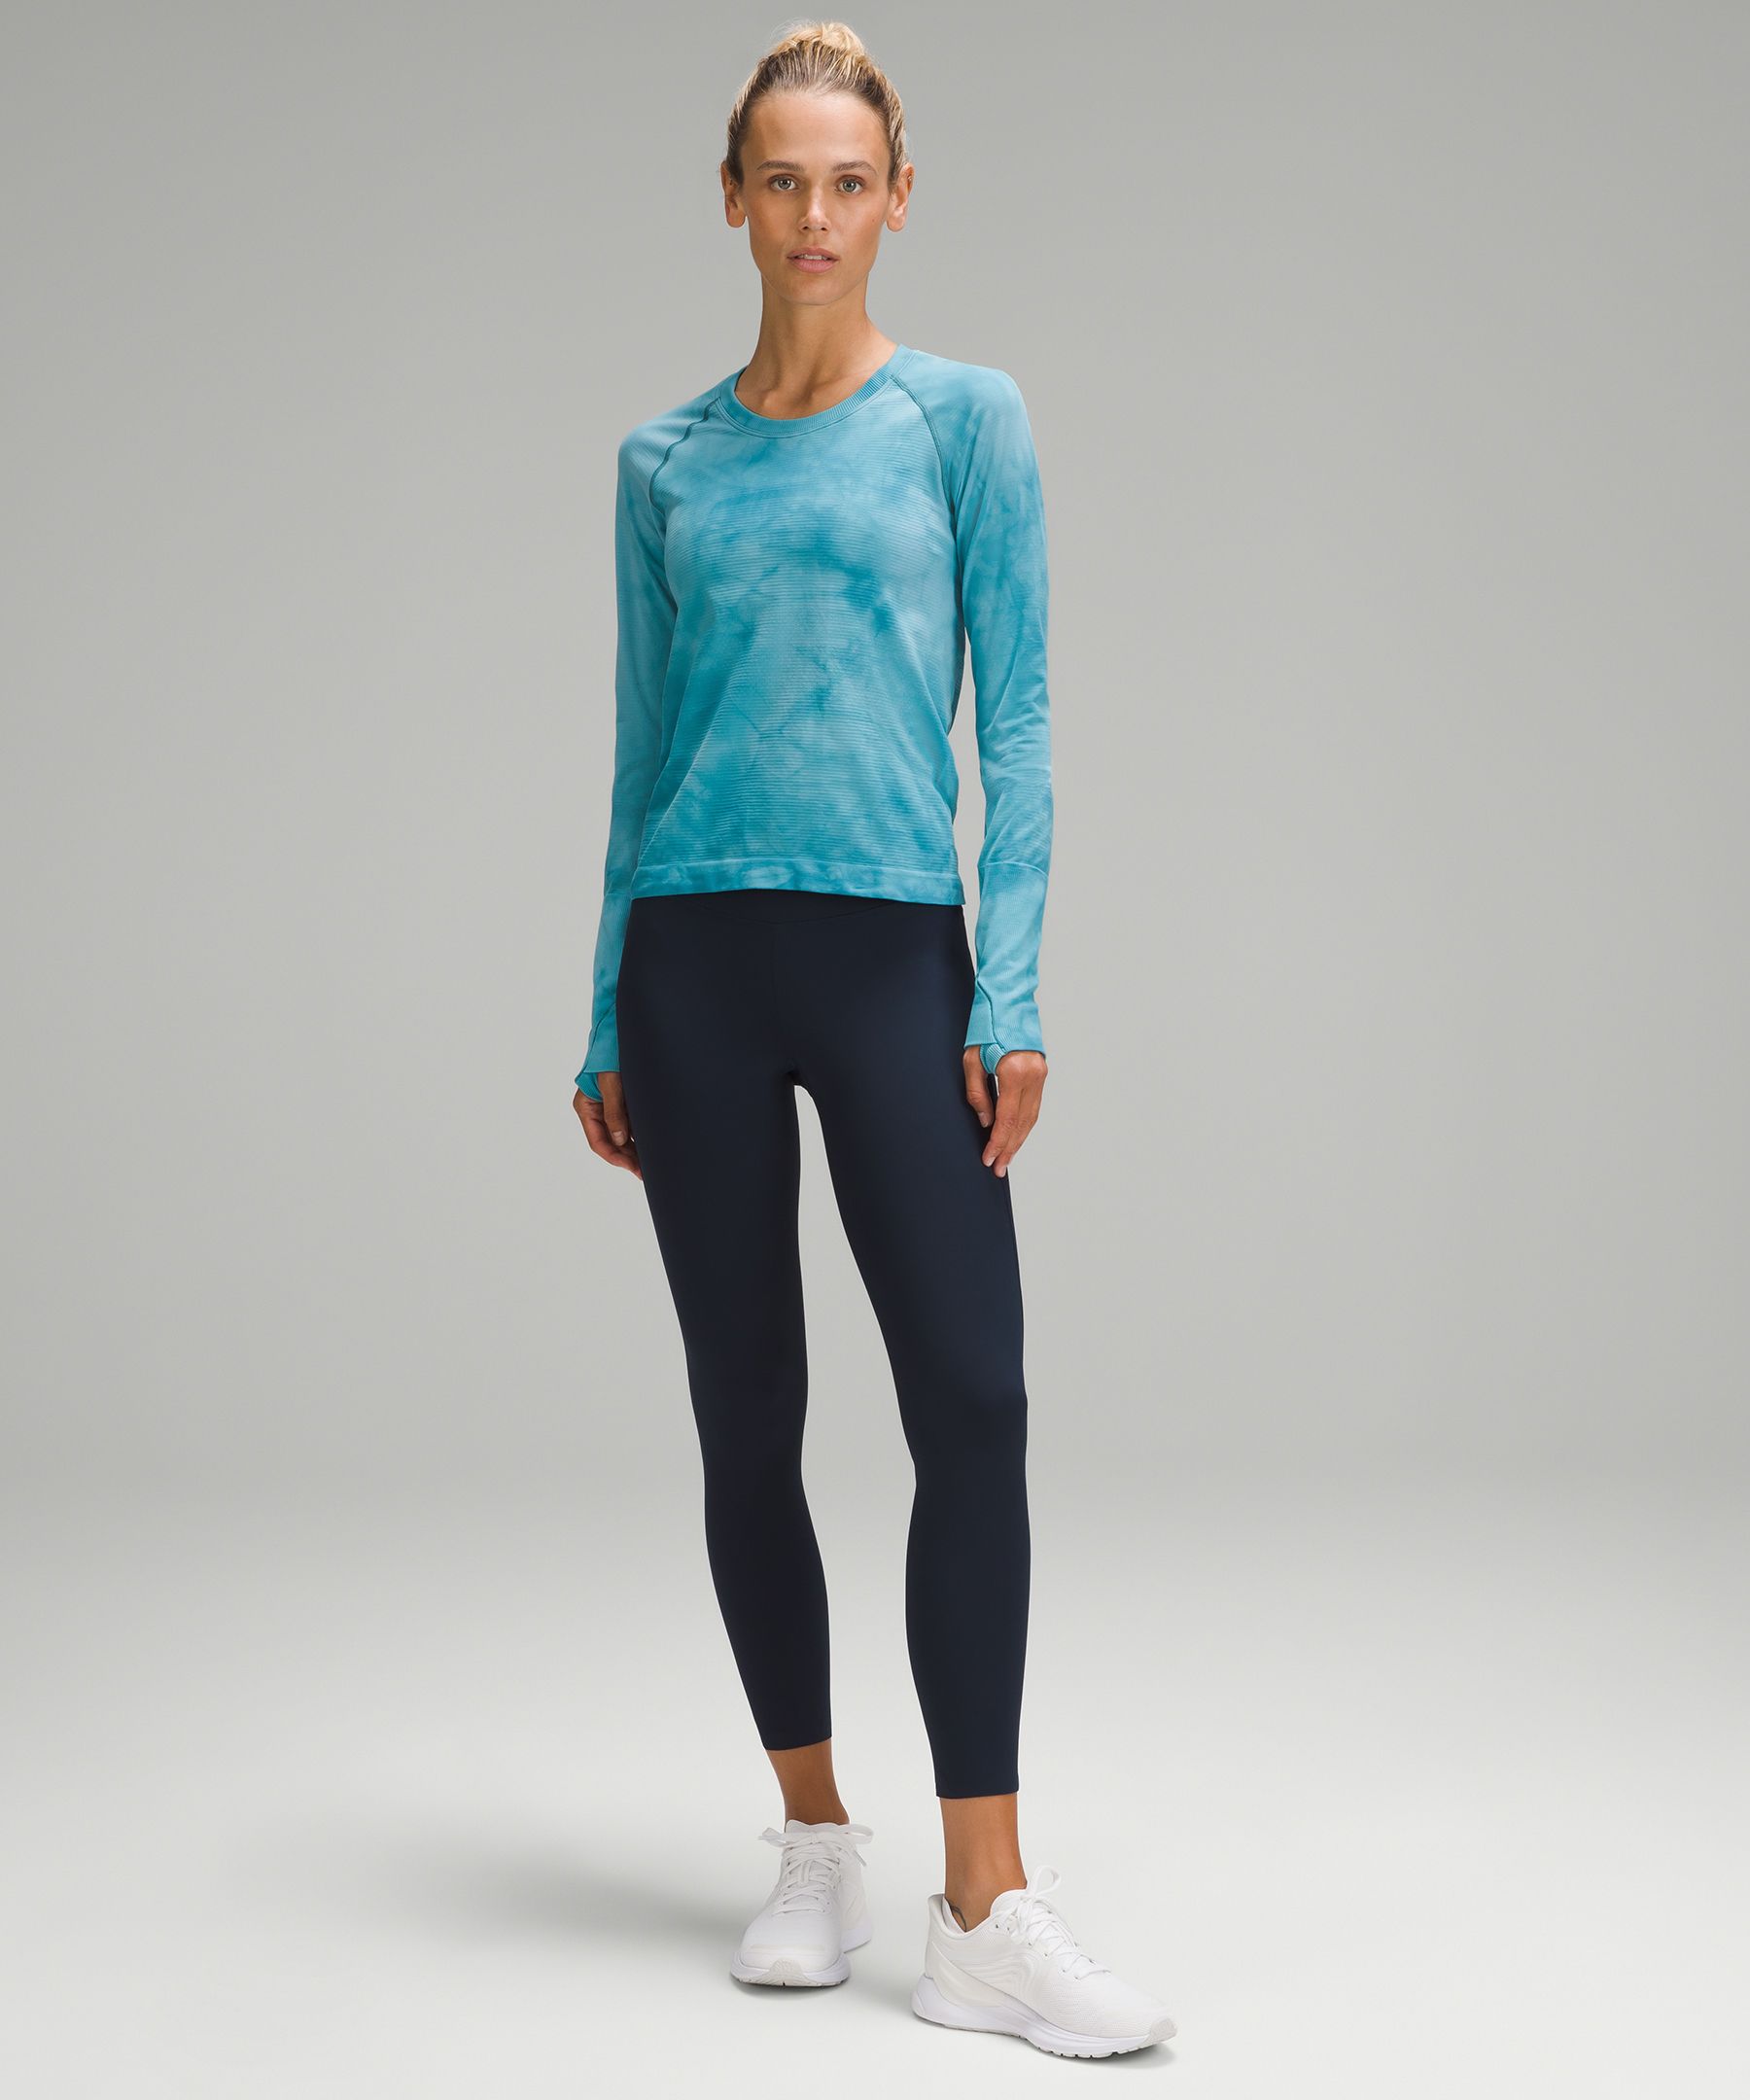 NWT Lululemon Blue Nile Swiftly Tech Long Sleeve Shirt 2.0 Race Length Size  4